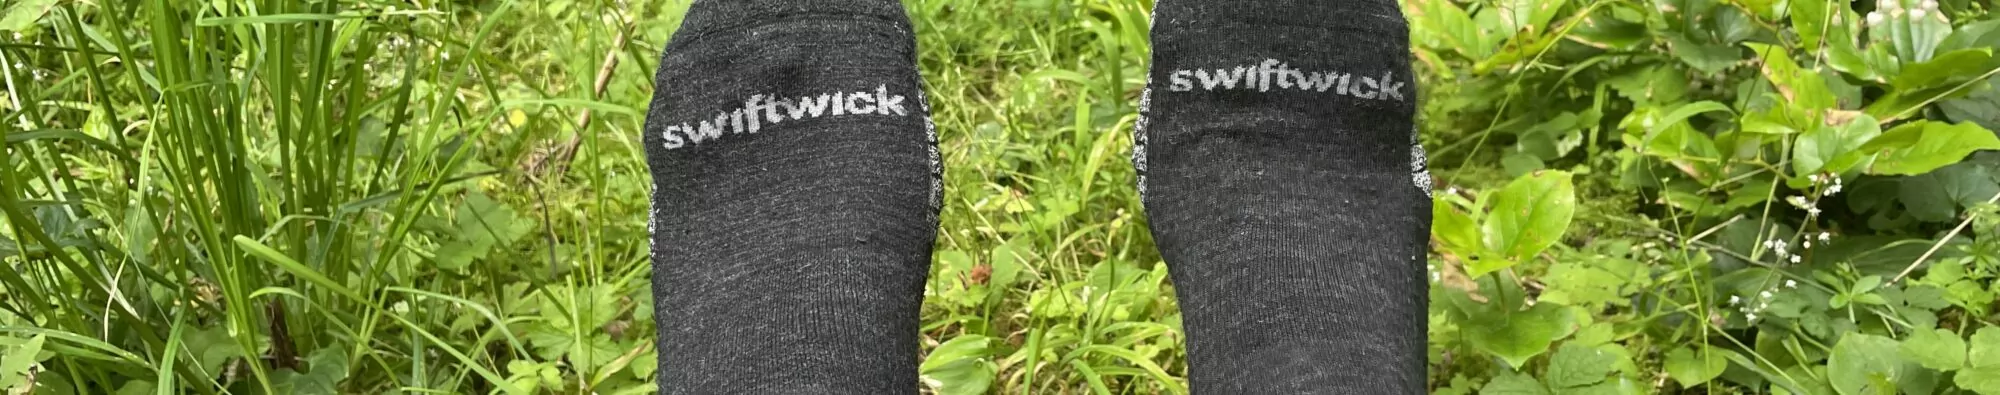 Swiftwick Hiking Socks